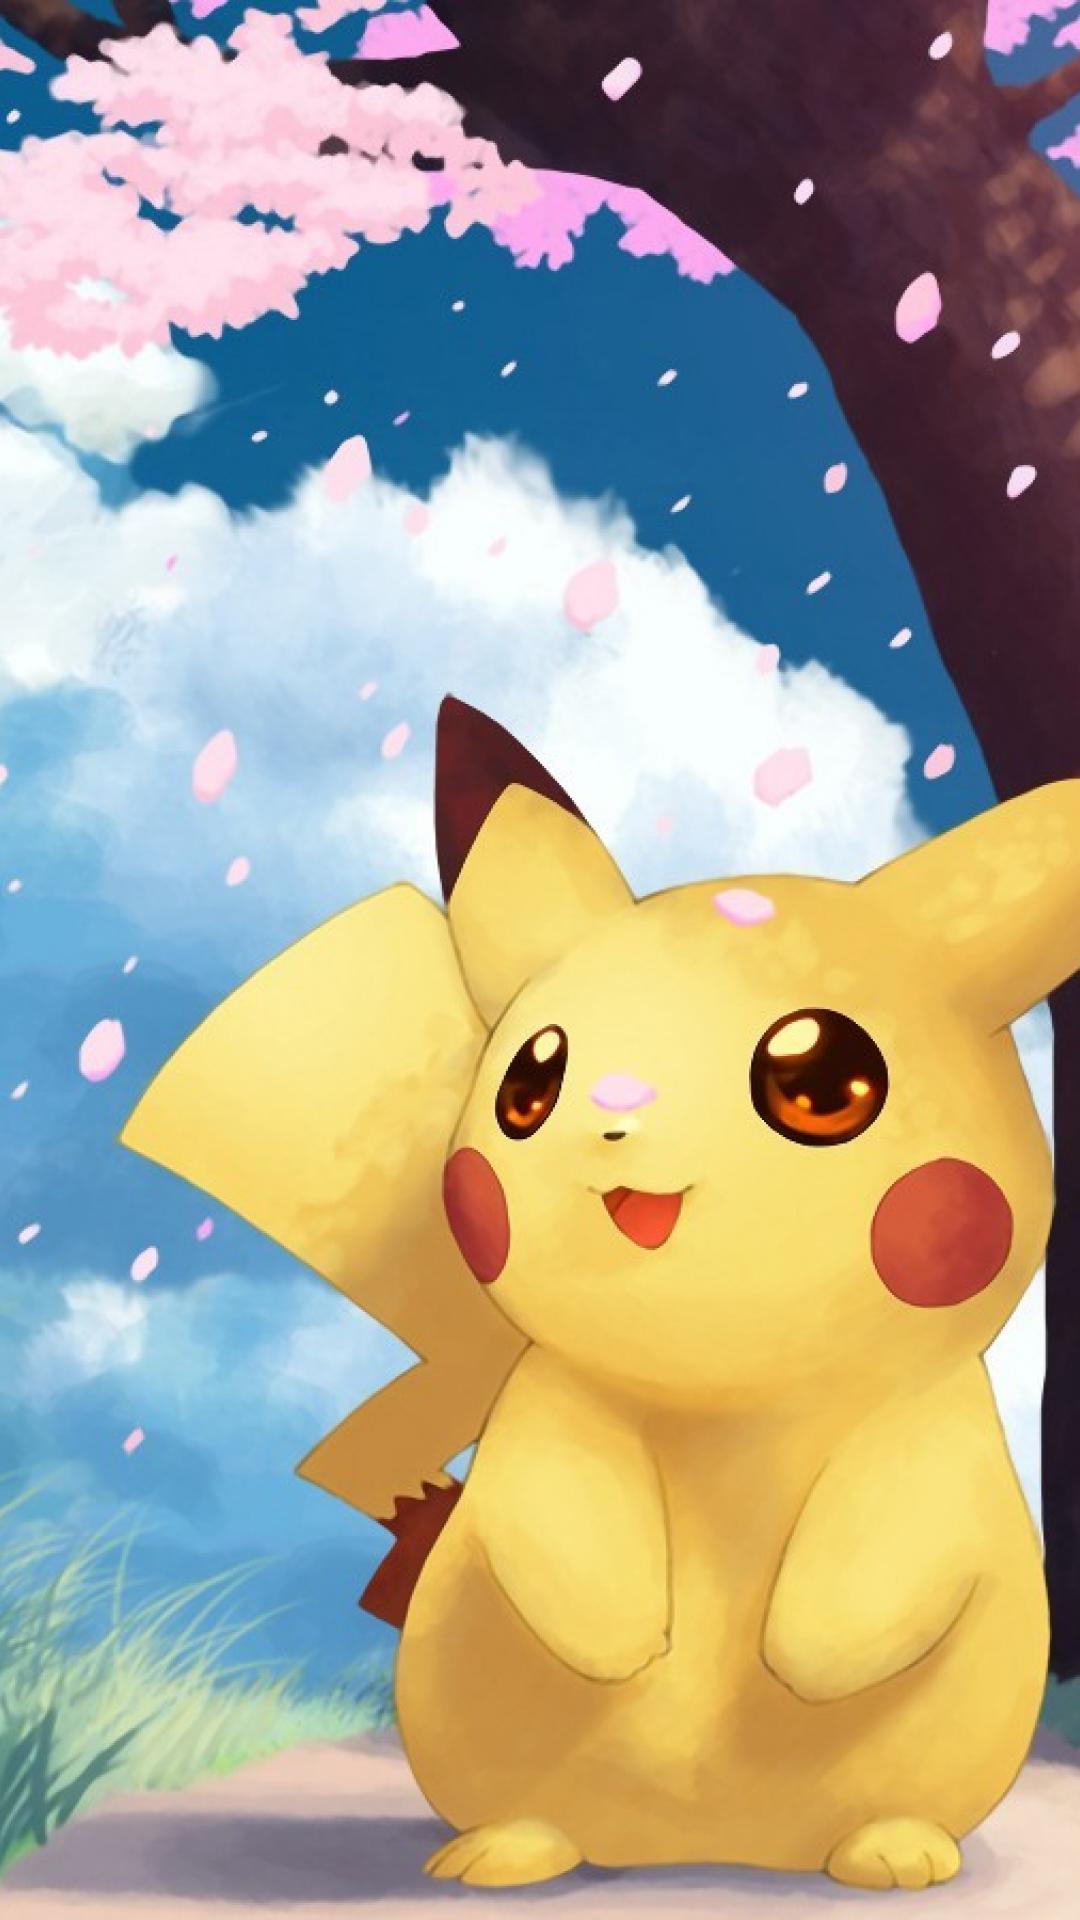 Pokemon iPhone Wallpaper Pikachu Wallpaper For Mobile